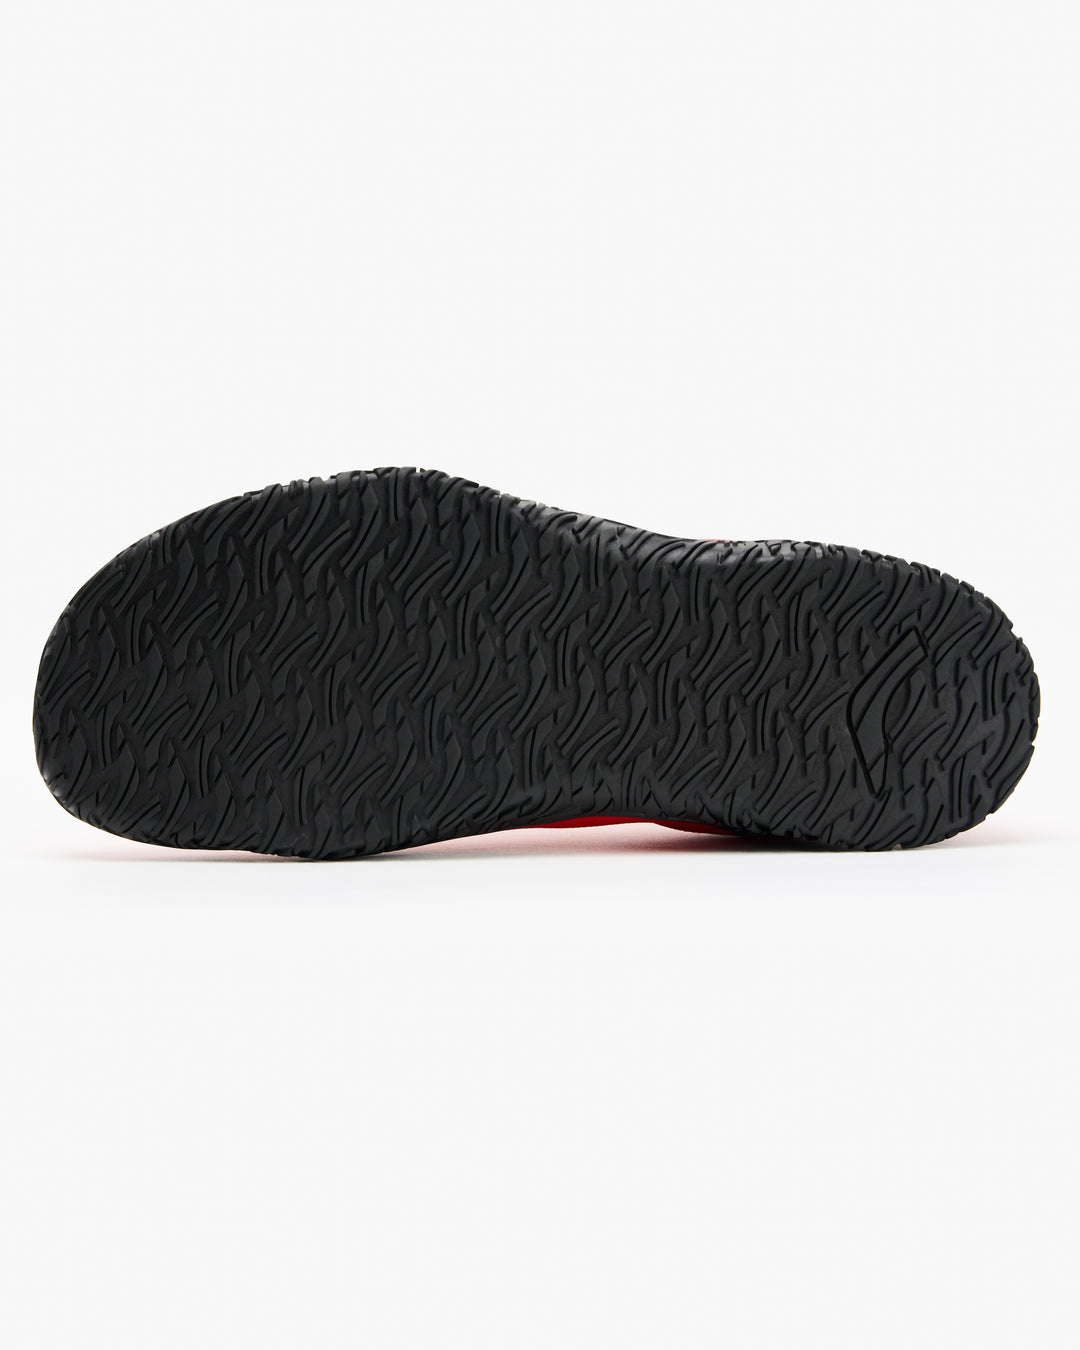 Chaussures Avancus Apex 1.5 Power Rouge/Noir 